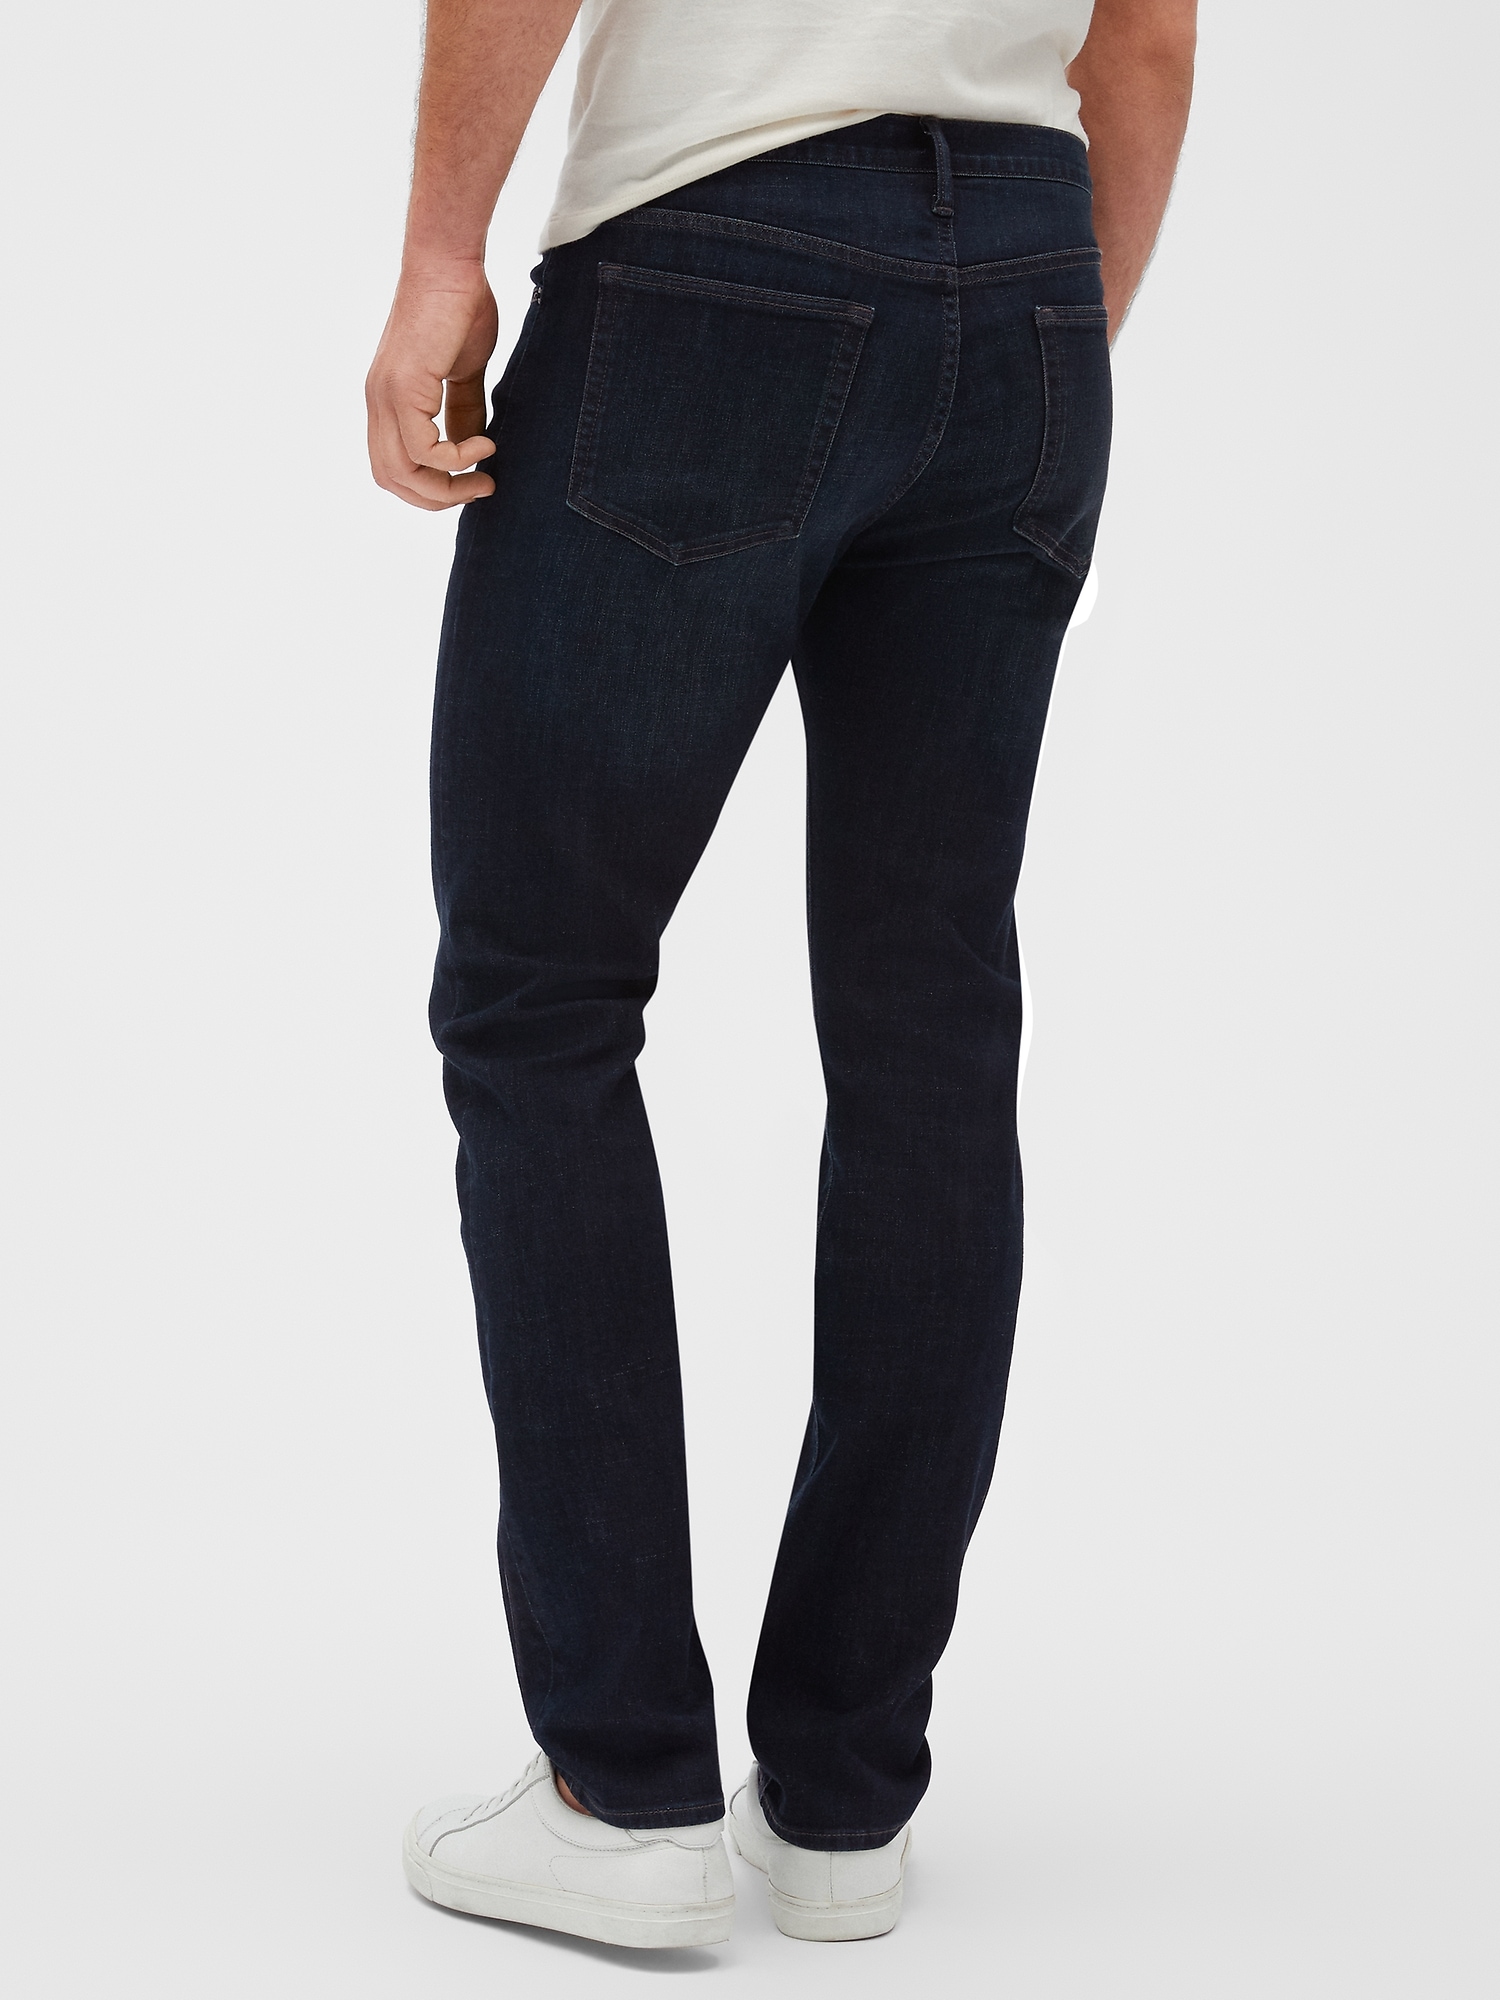 Soft Wear Slim Fit Jeans with GapFlex | Gap Factory